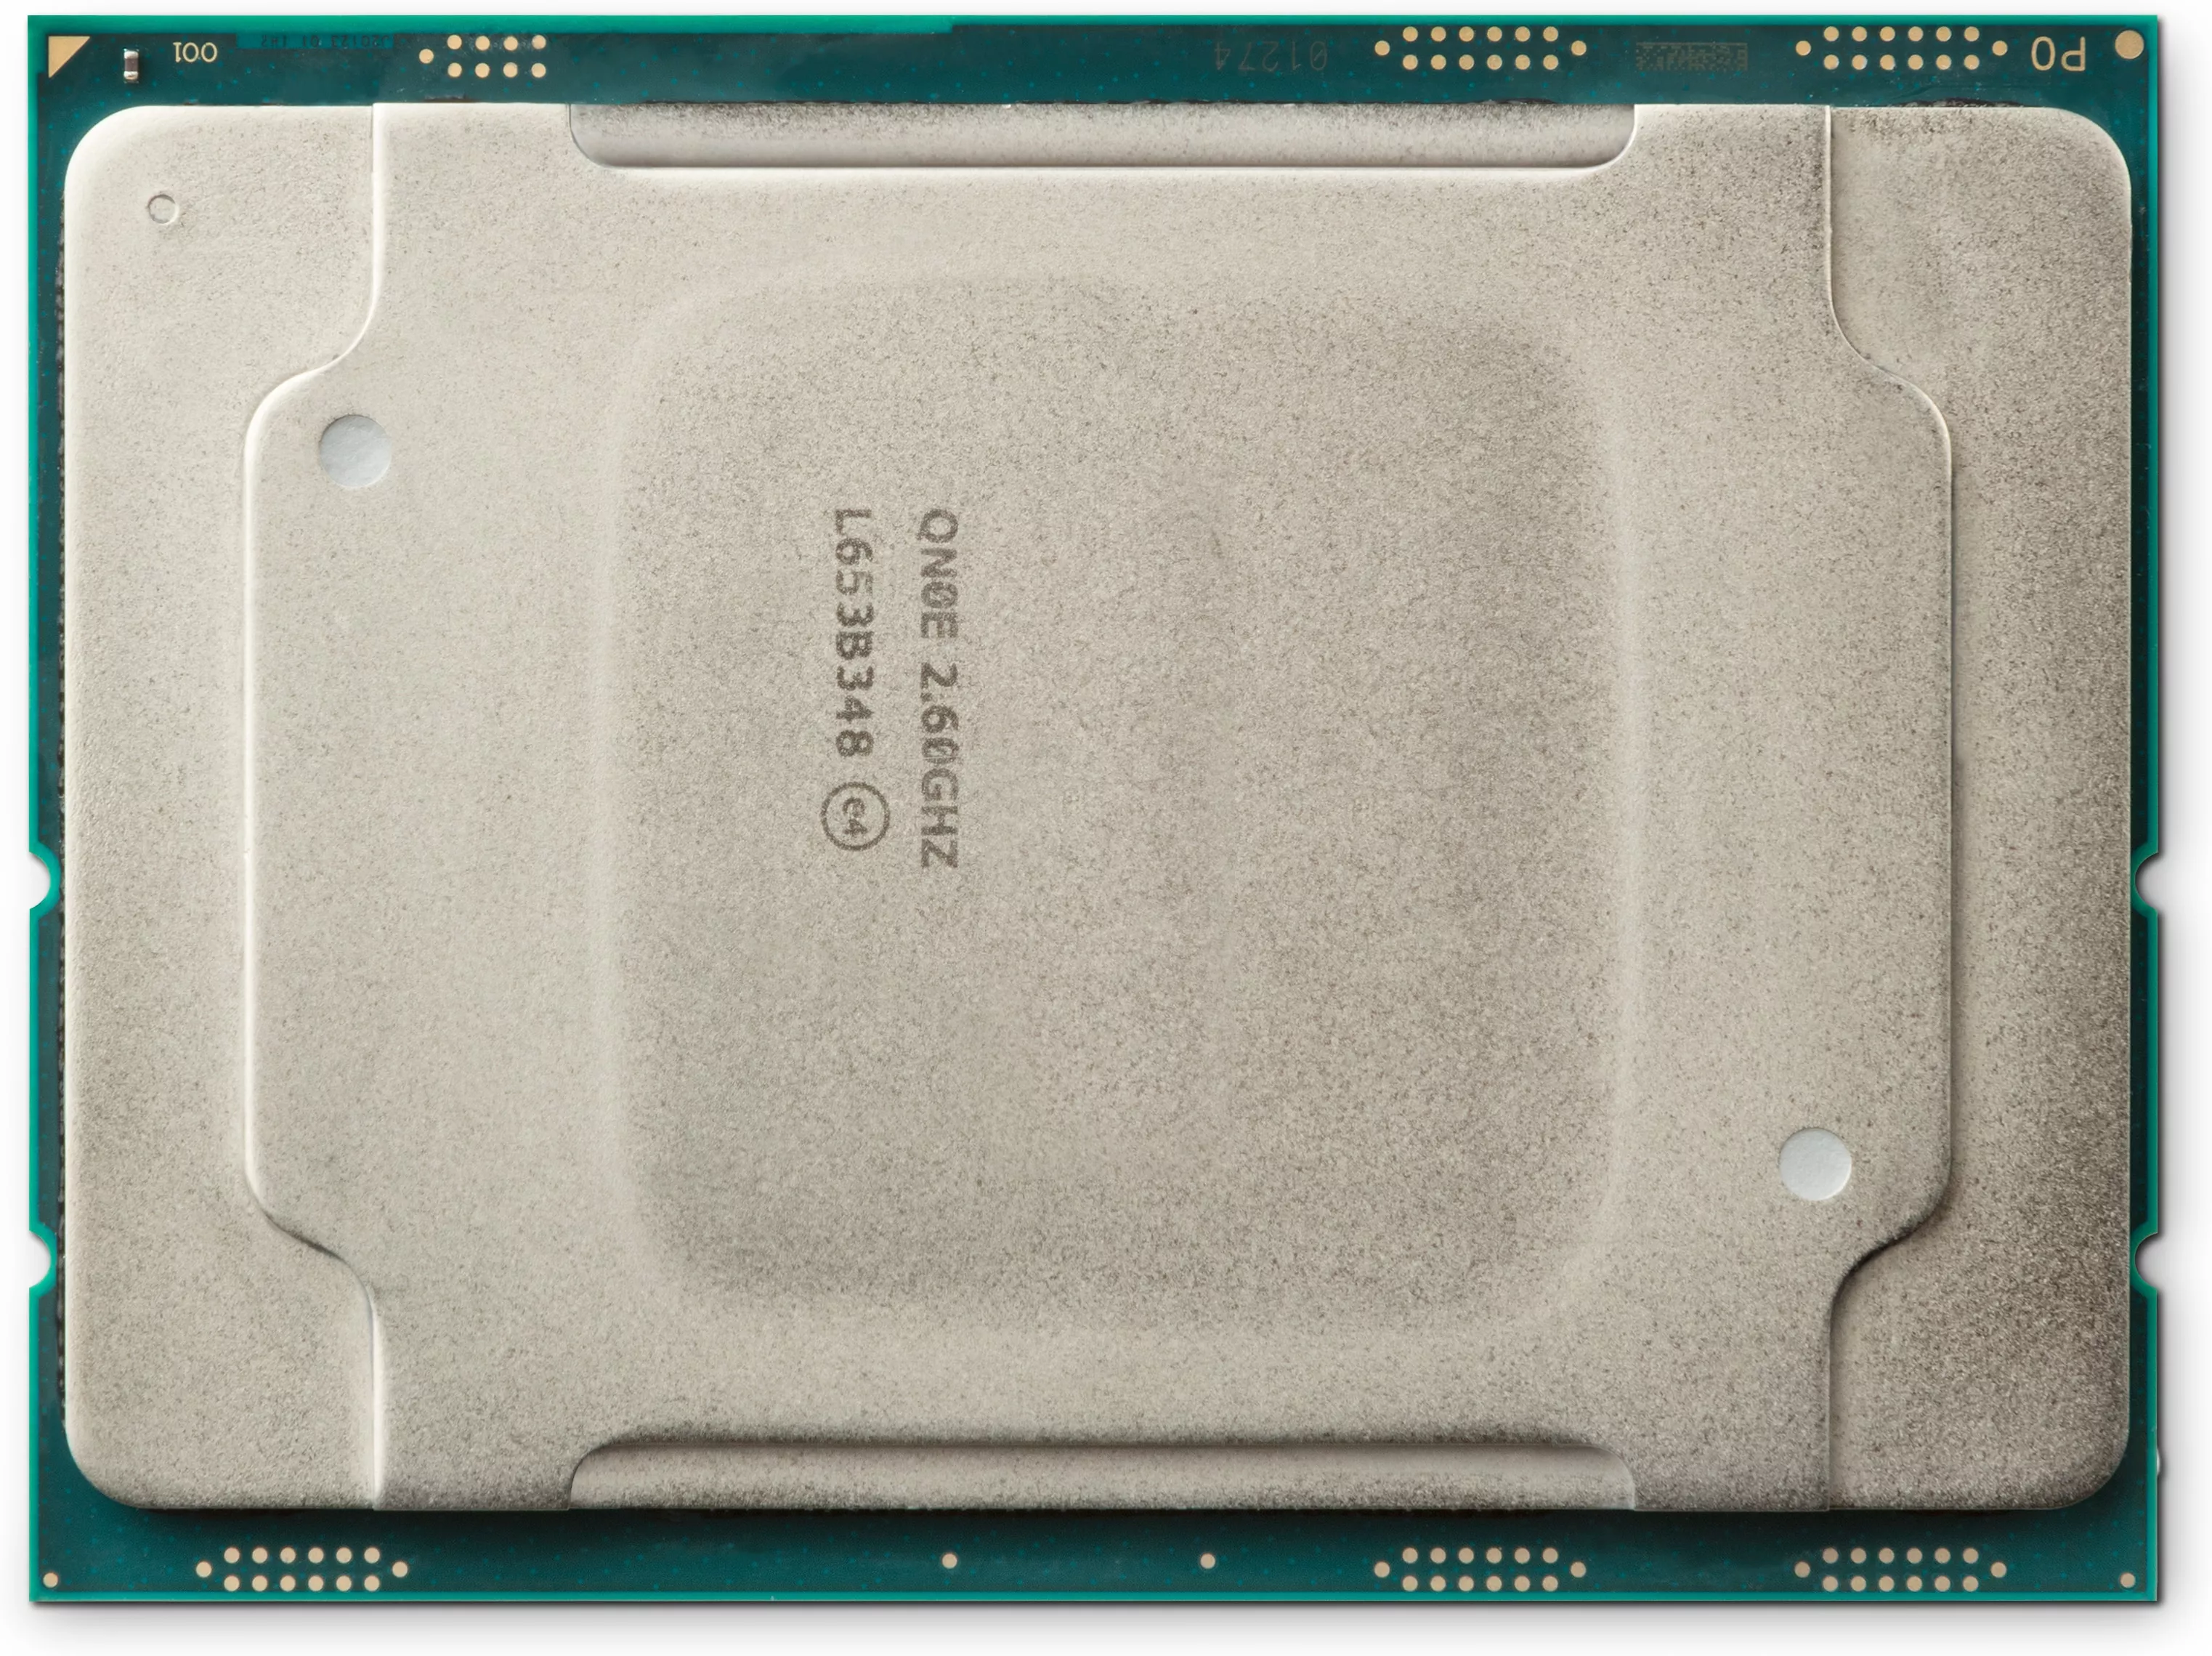 Vente HP Z6G4 Xeon 6242 2.8 2933 16C 150W HP au meilleur prix - visuel 2